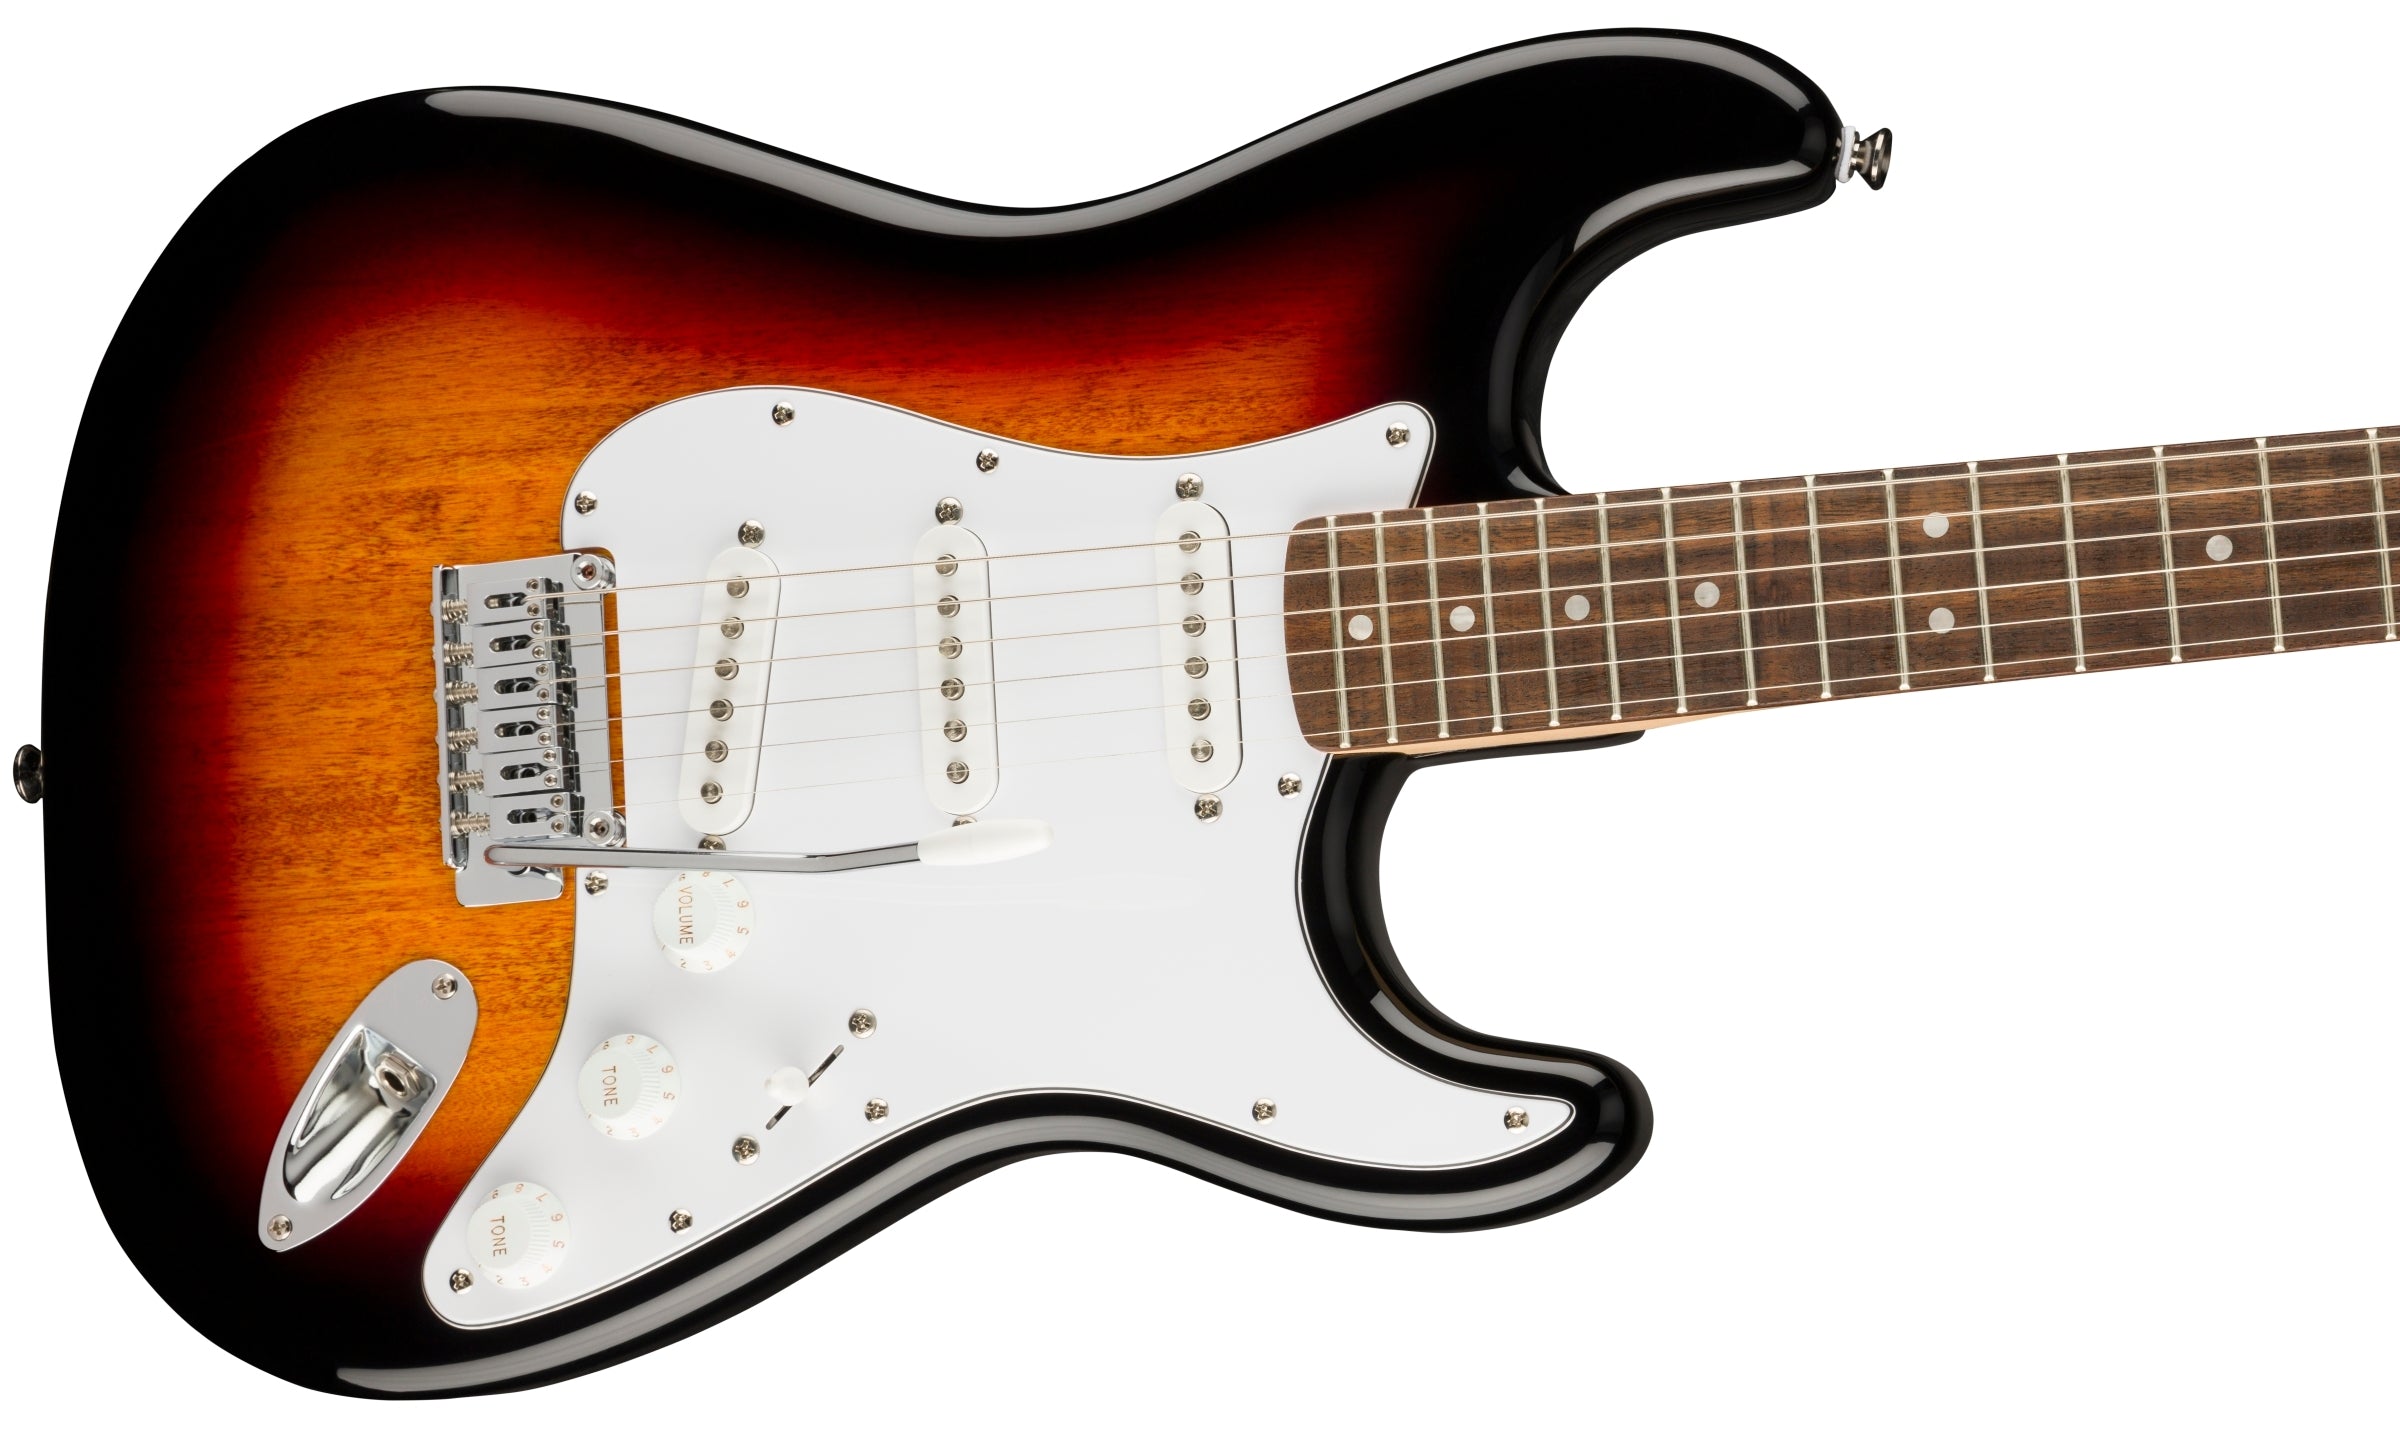 Squier Affinity Series Stratocaster Electric Guitar - 3 Color Sunburst